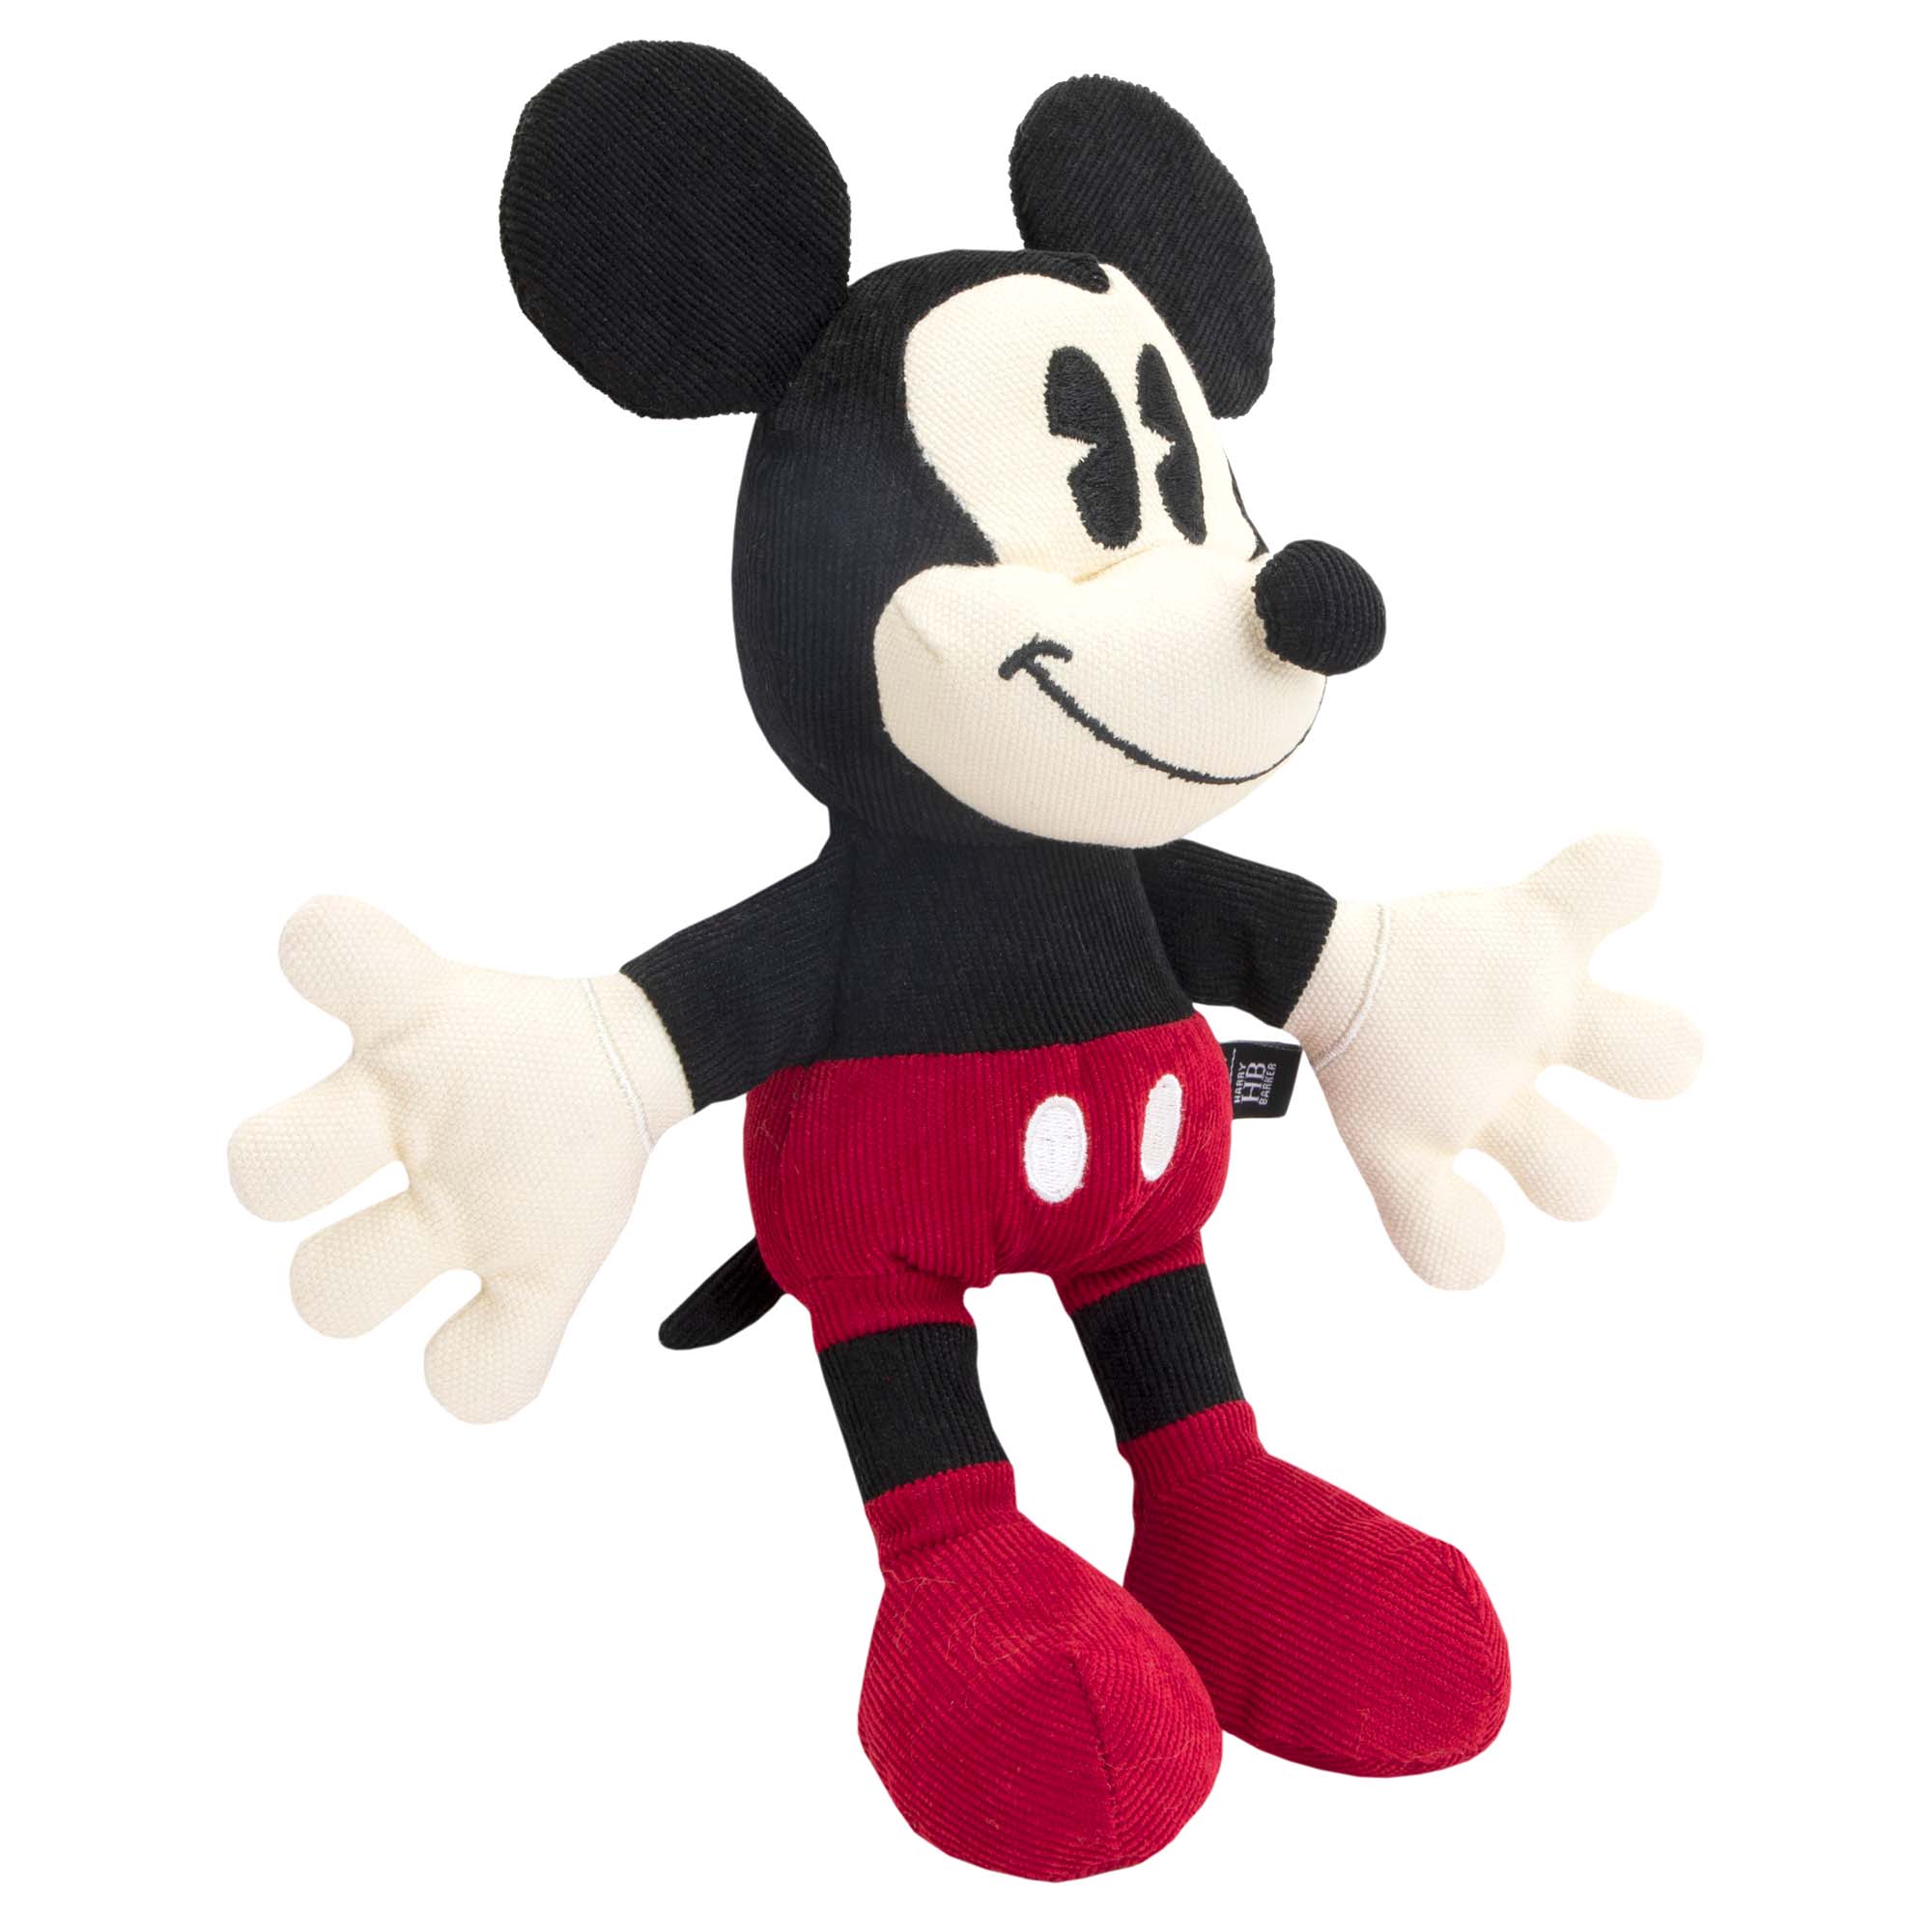 Vintage Mickey Plush Toy - Harry Barker